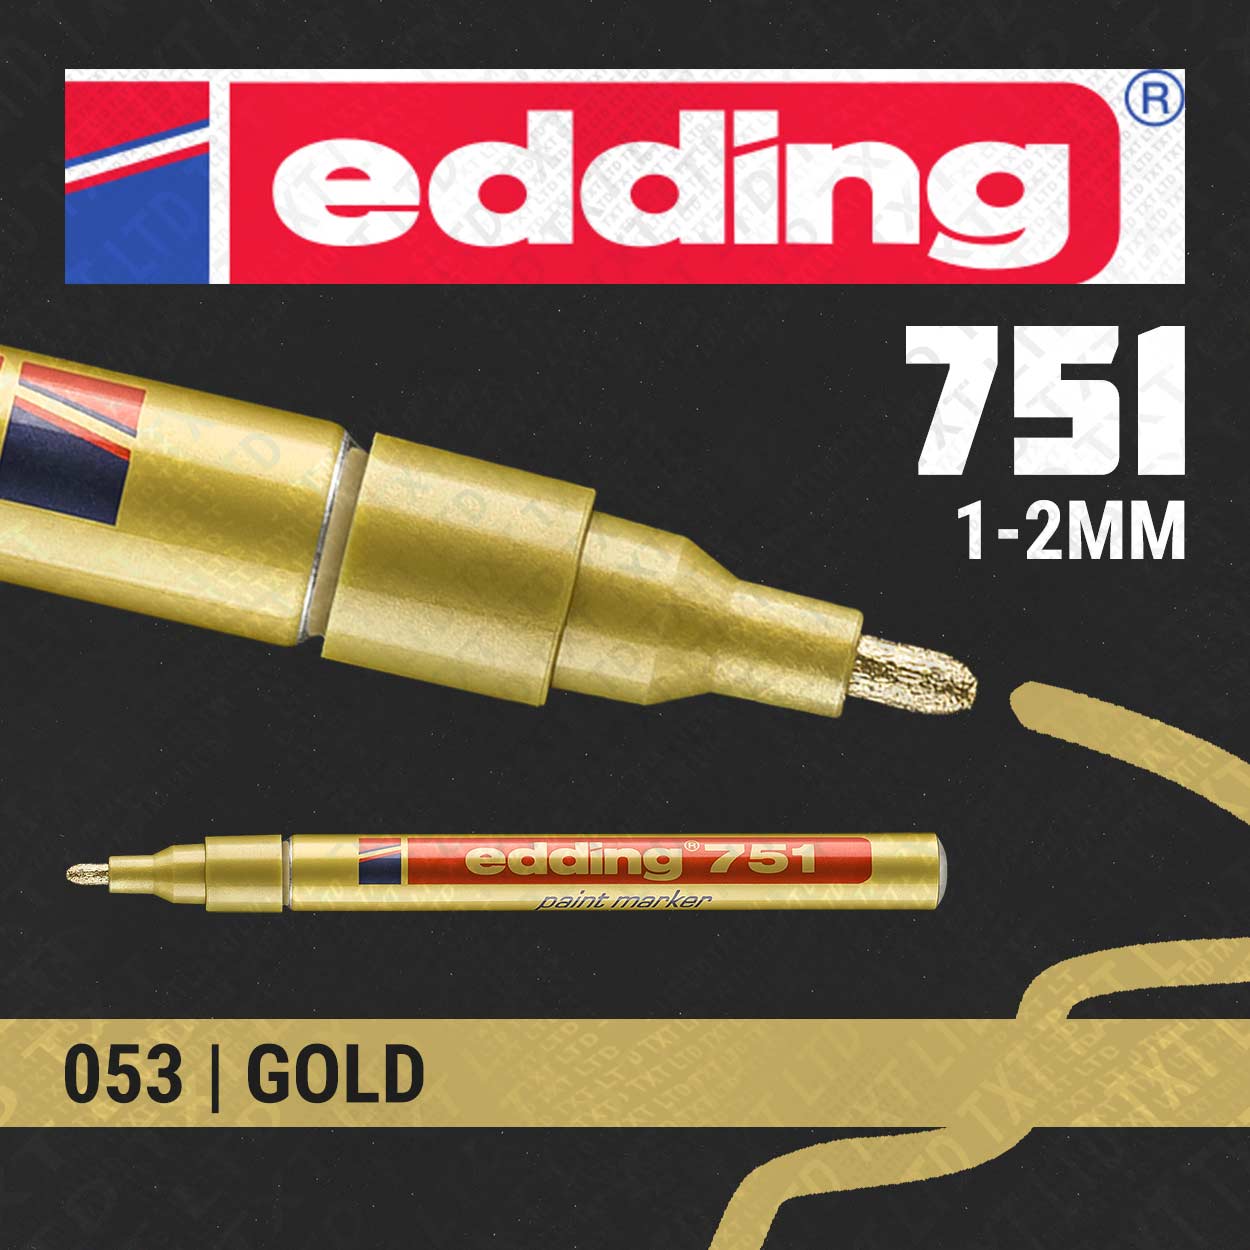 edding 751 Paint Marker 1-2mm